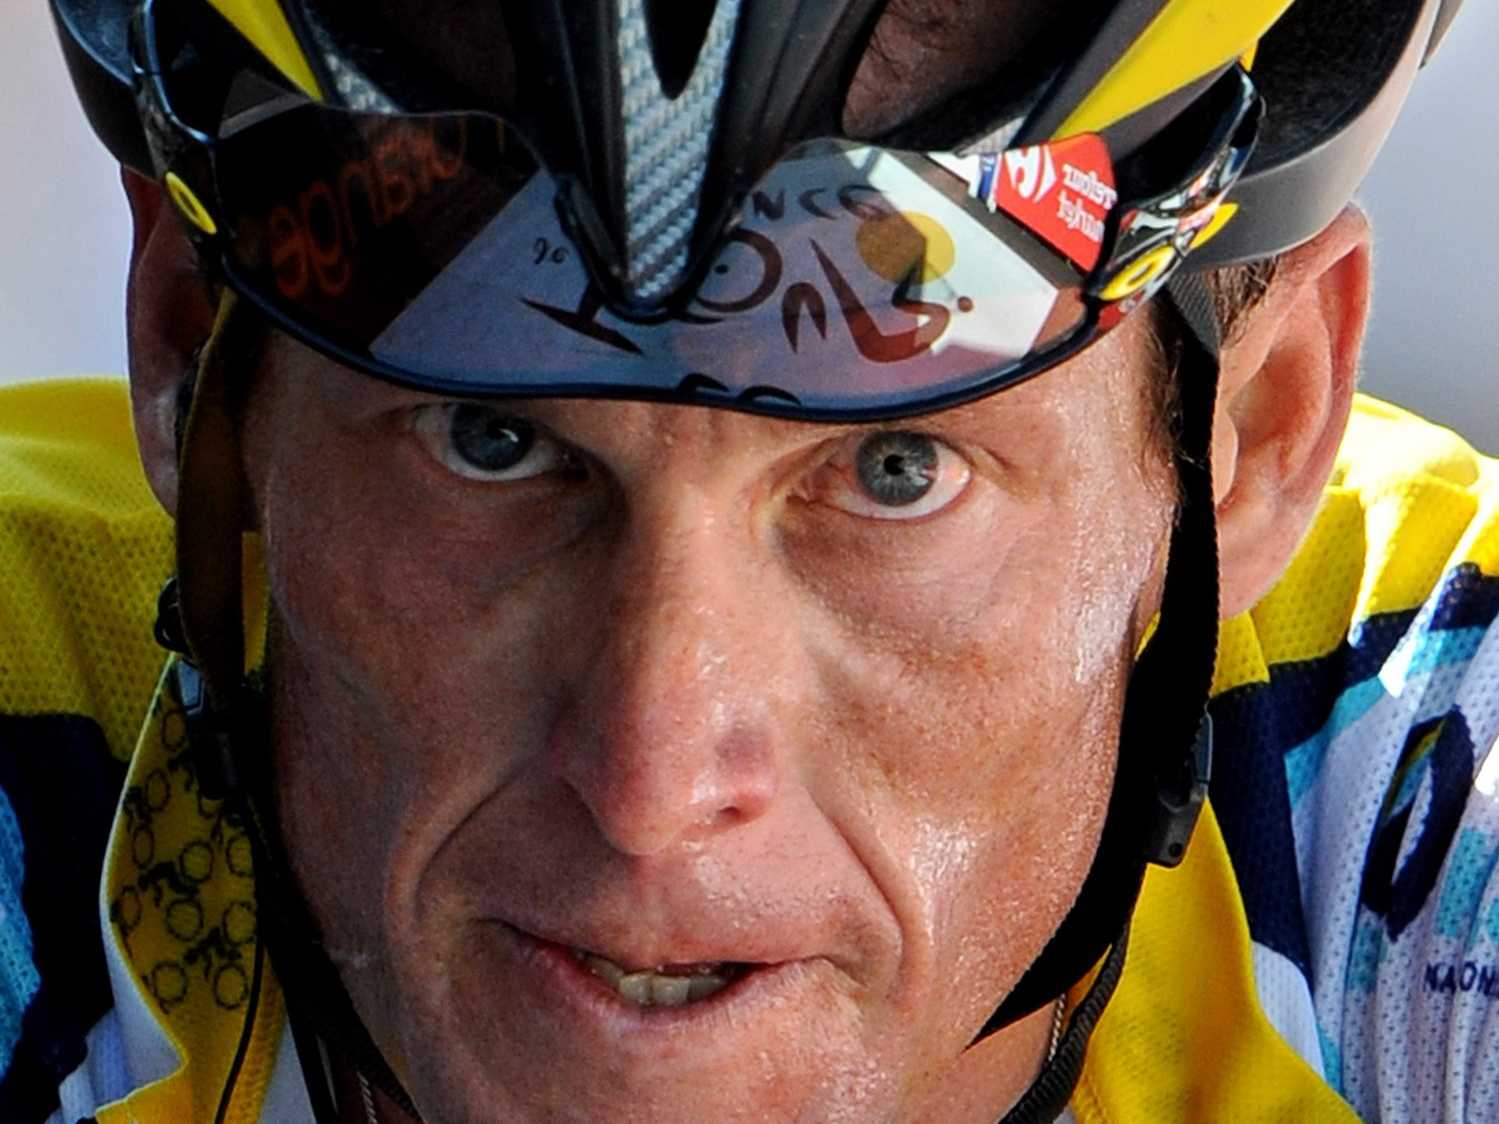 Sarri sbaglia: la Juventus è Armstrong, non Merckx